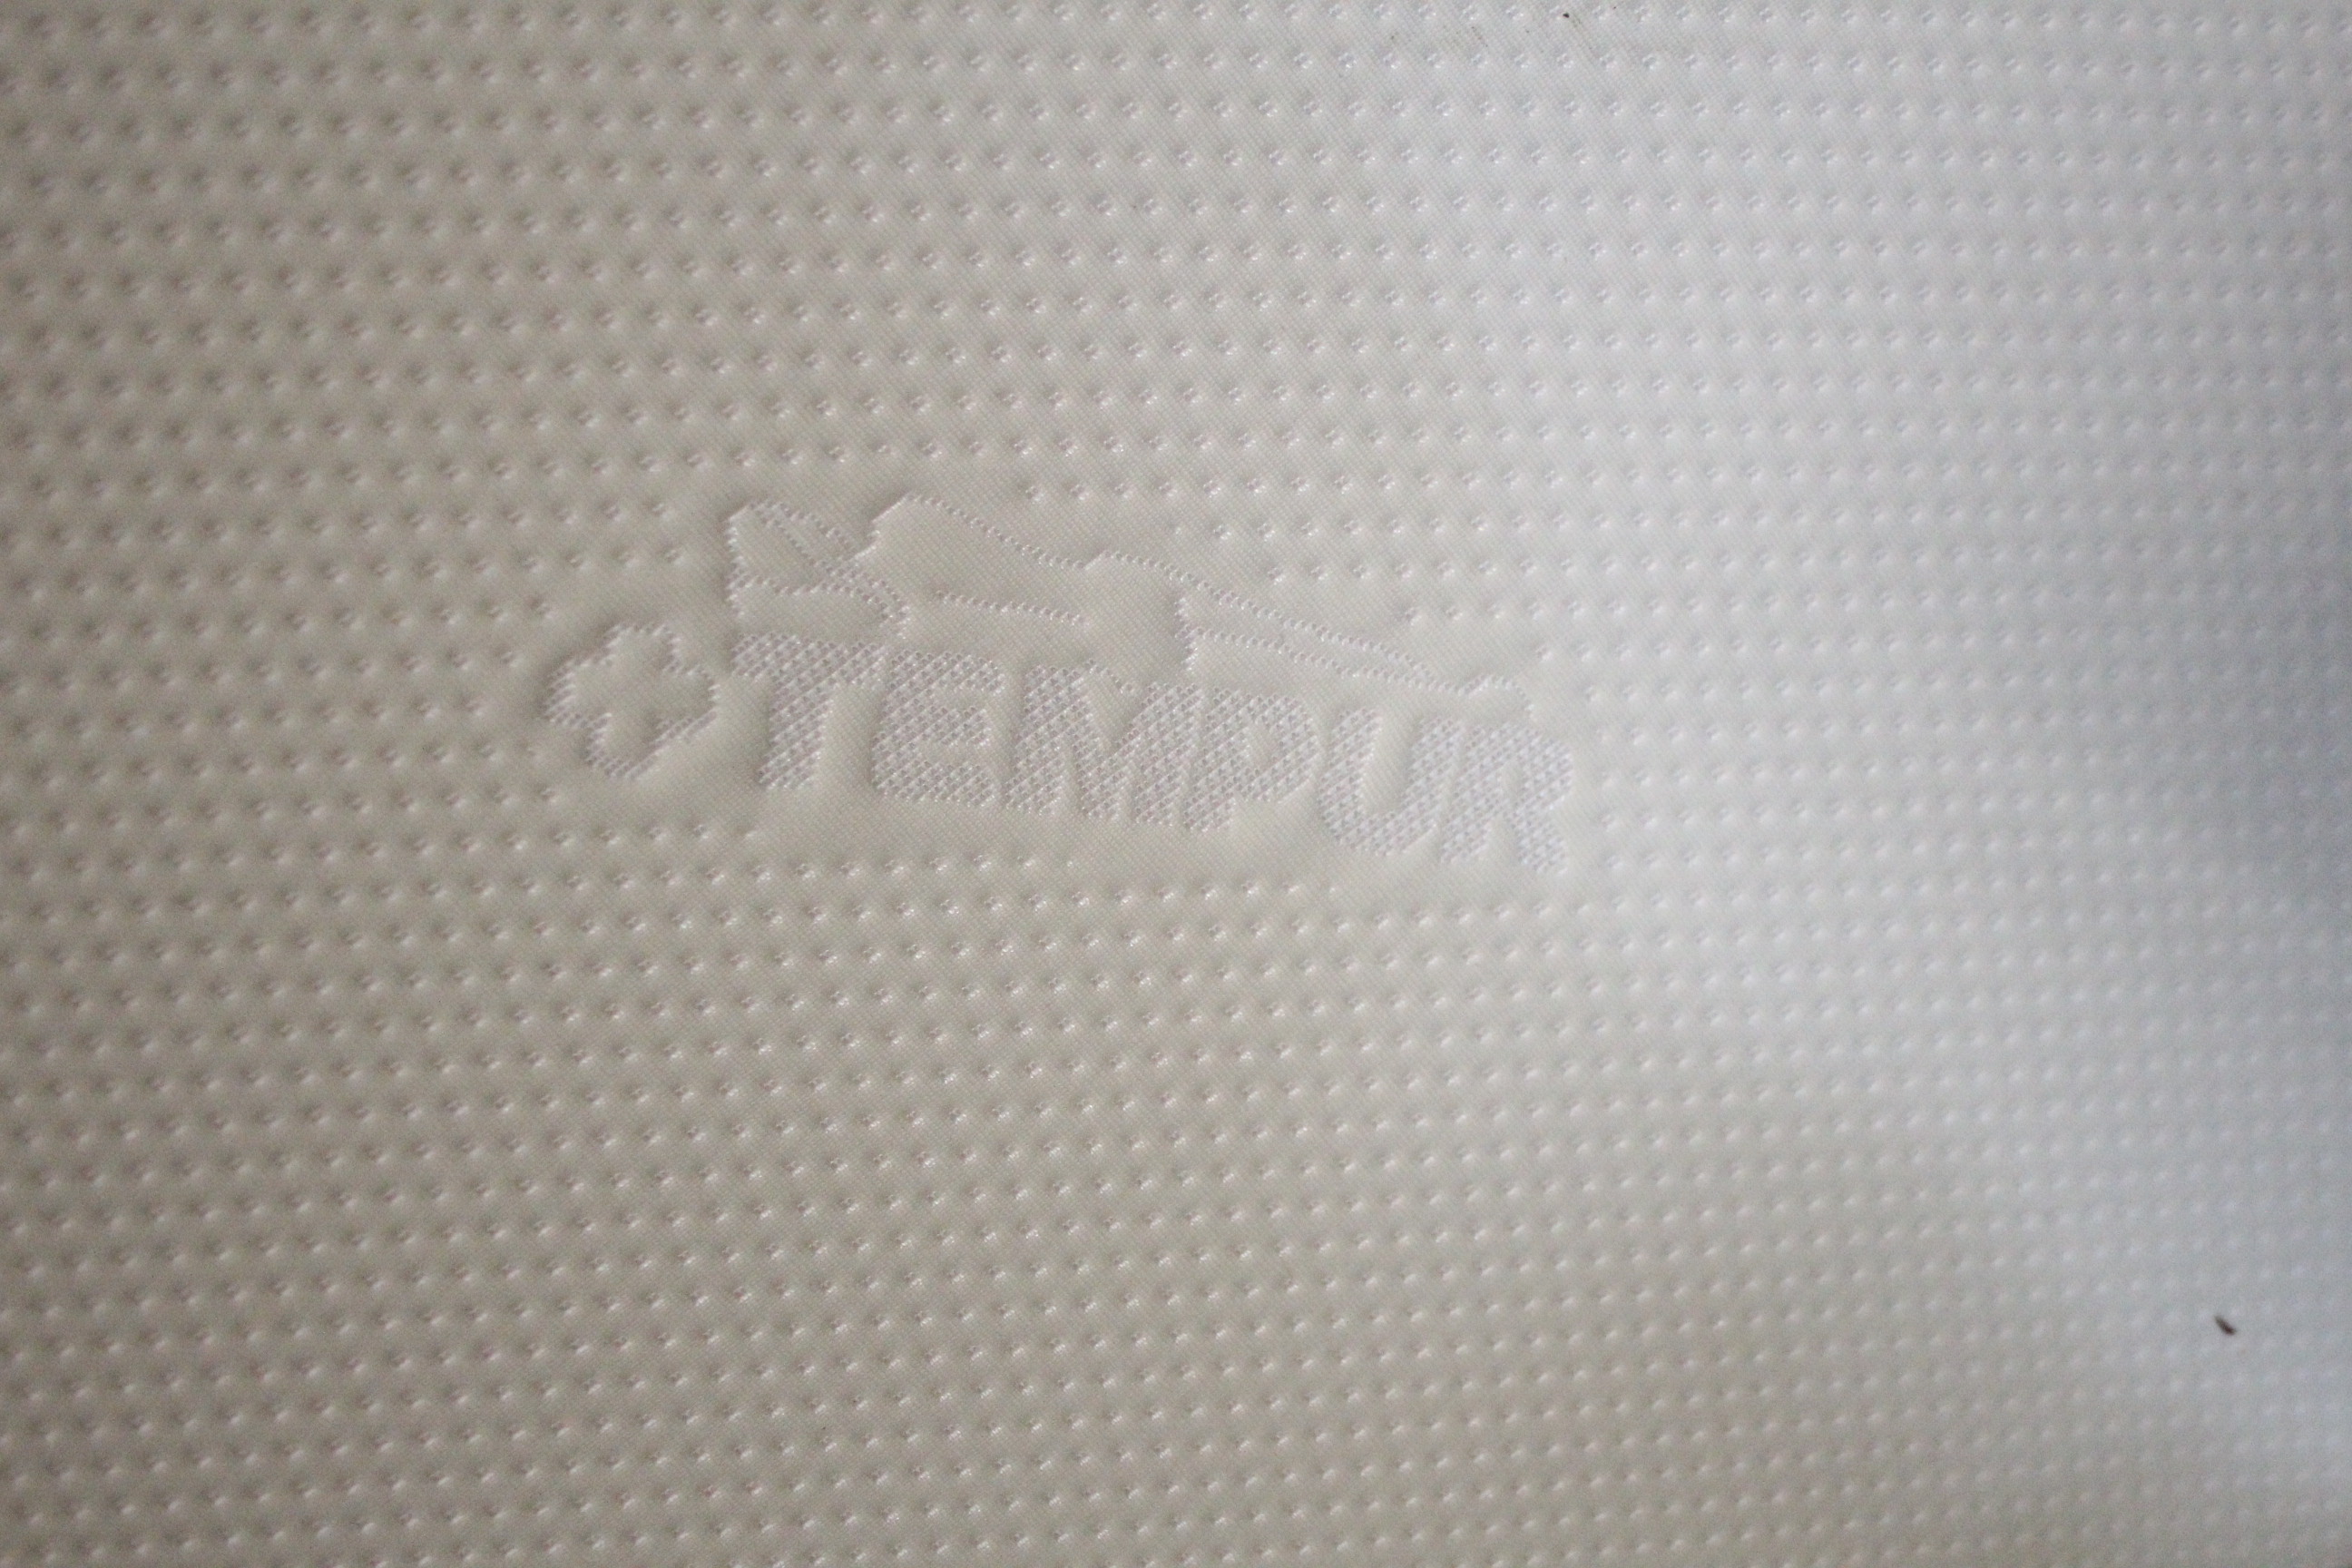 A Tempur Memory Foam 3' mattress. - Image 2 of 2